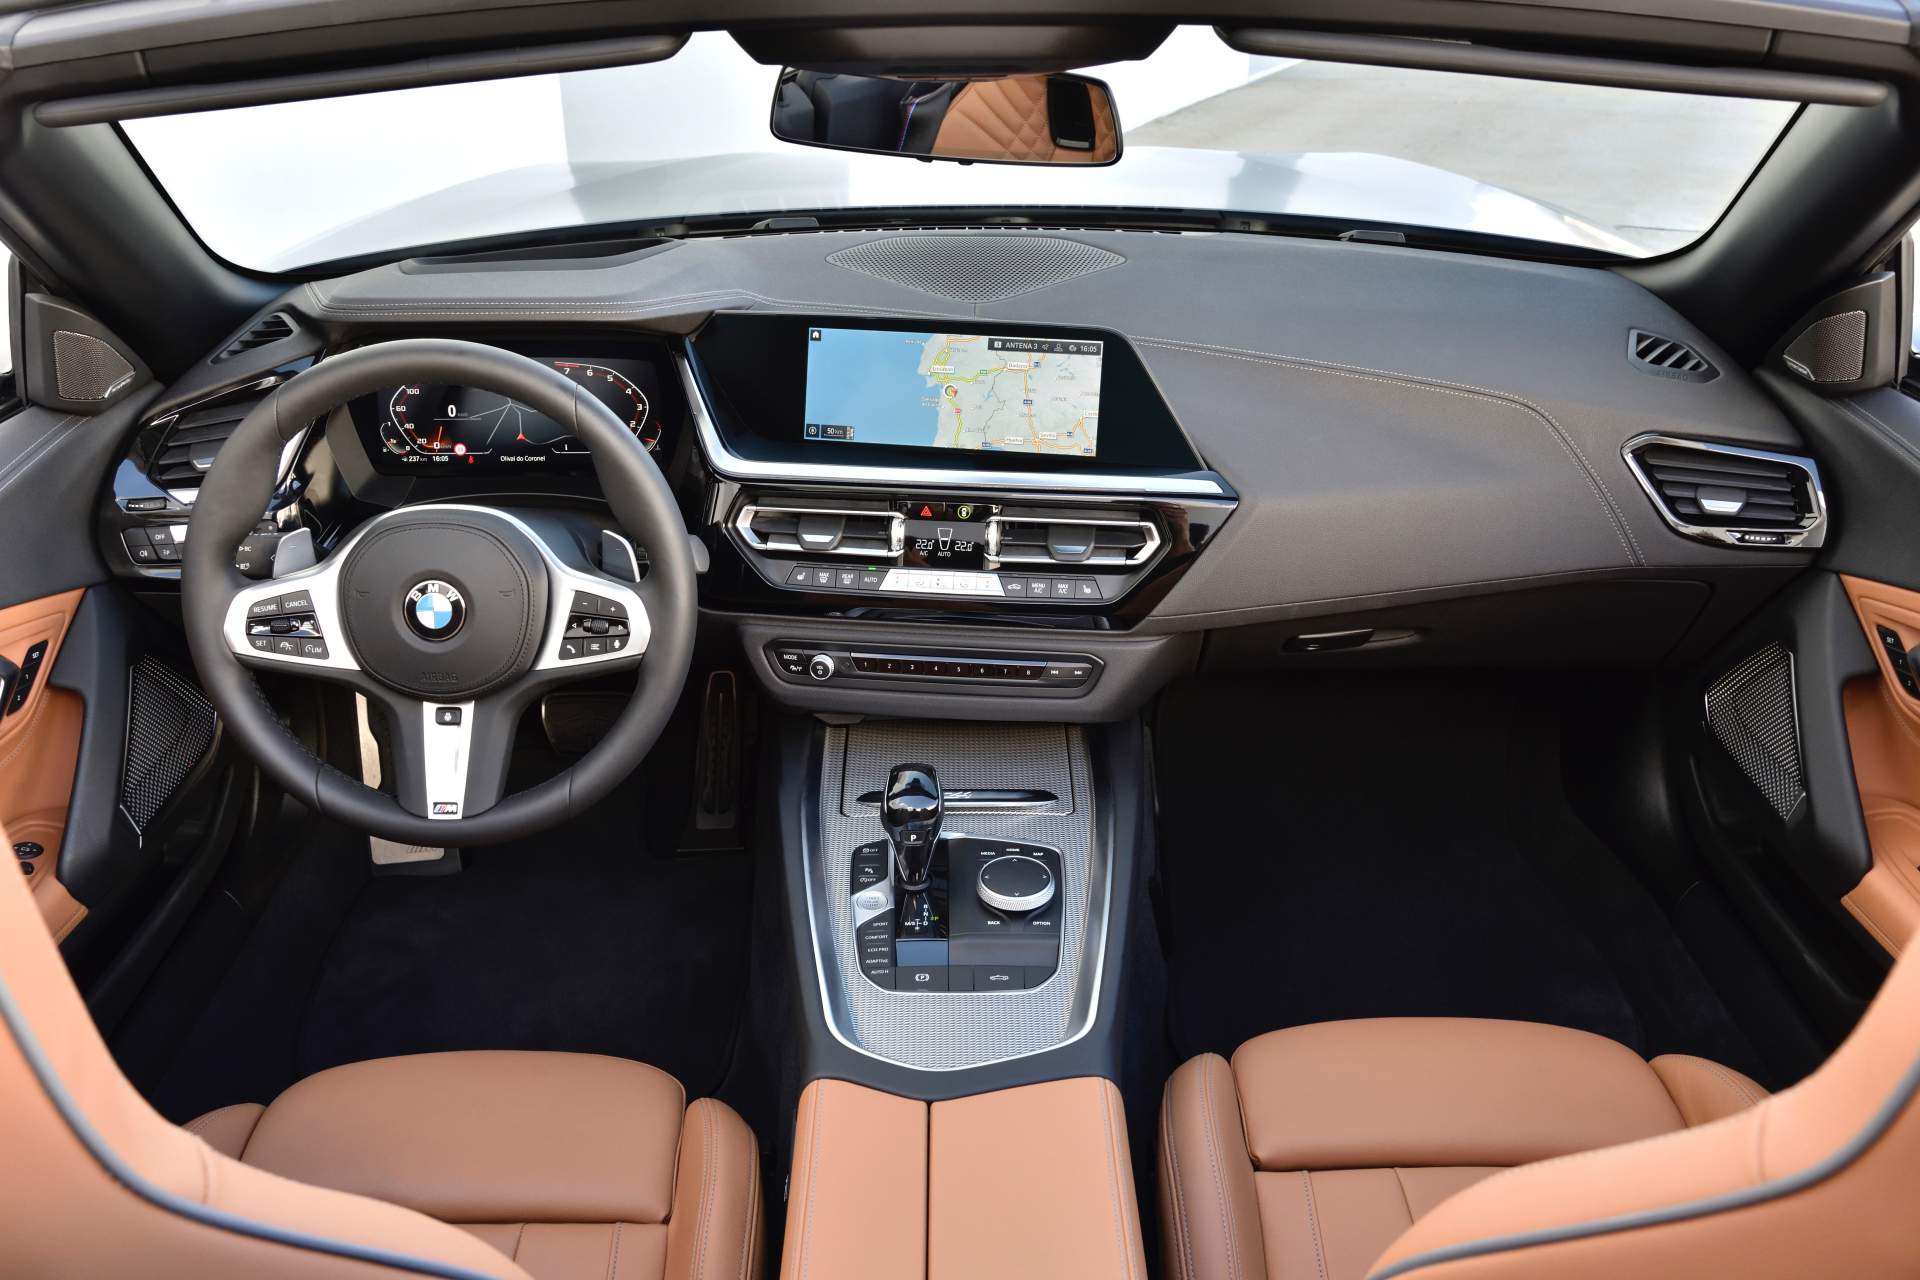 Immagine interni nuova BMW Z4 2019